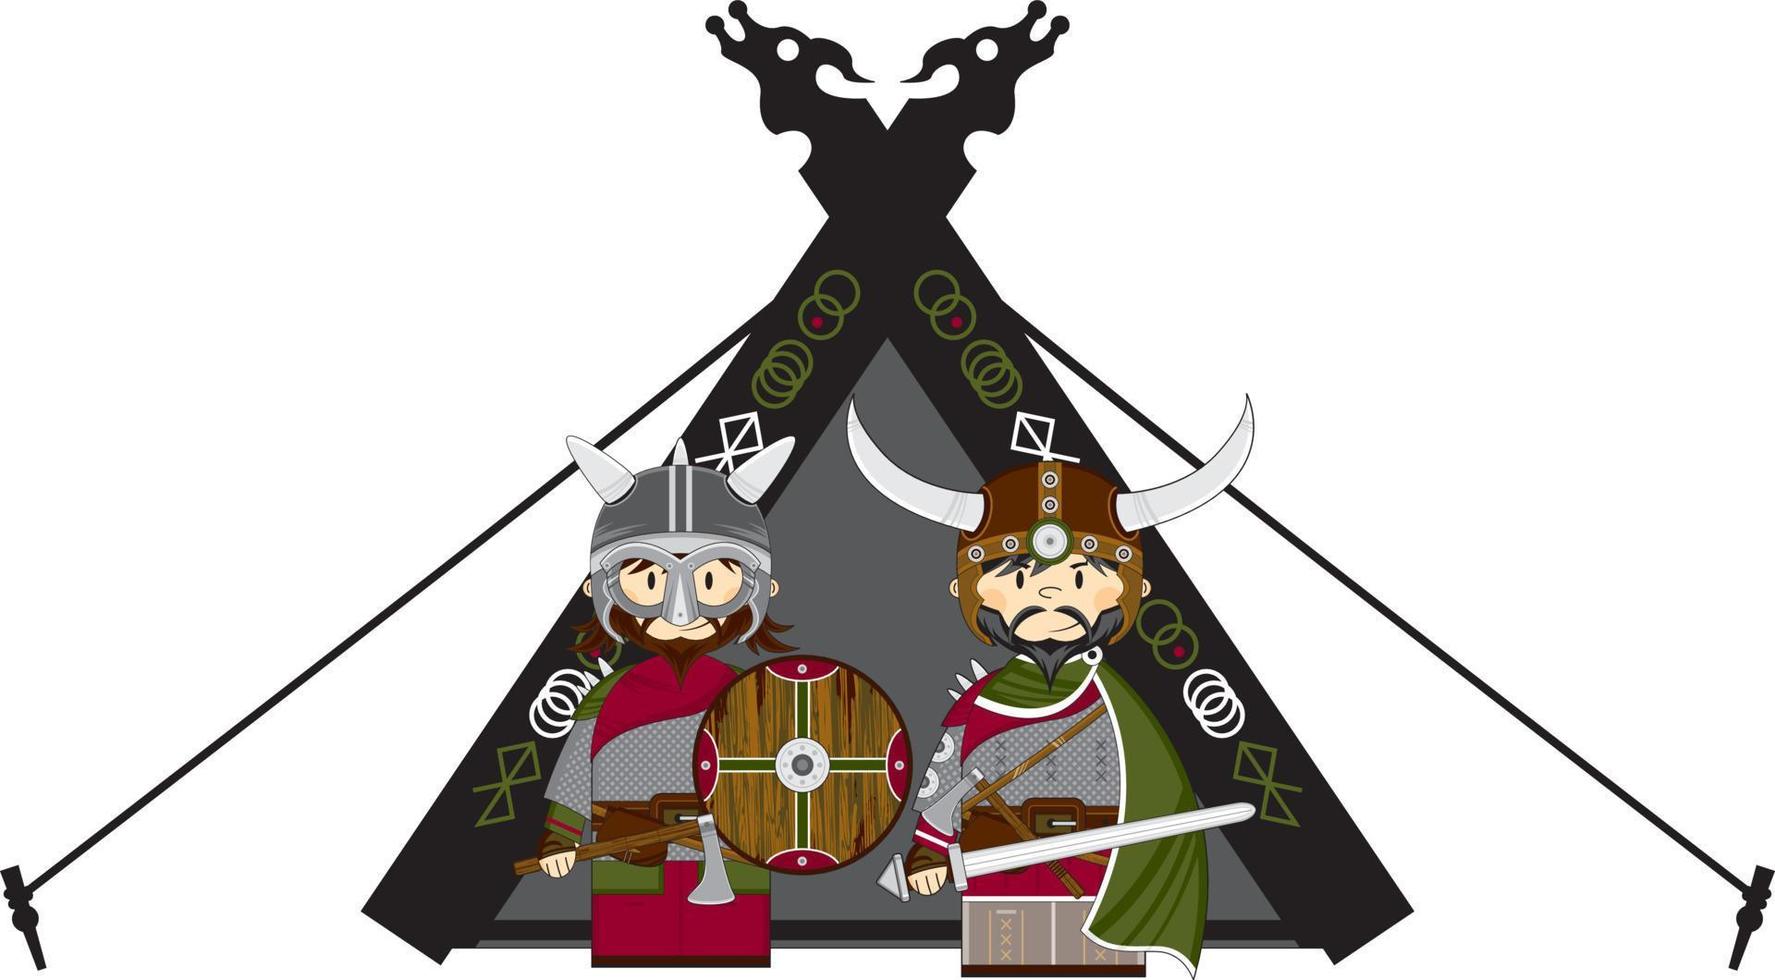 Cute Cartoon Viking Warrior and Tent Norse History Illustration vector